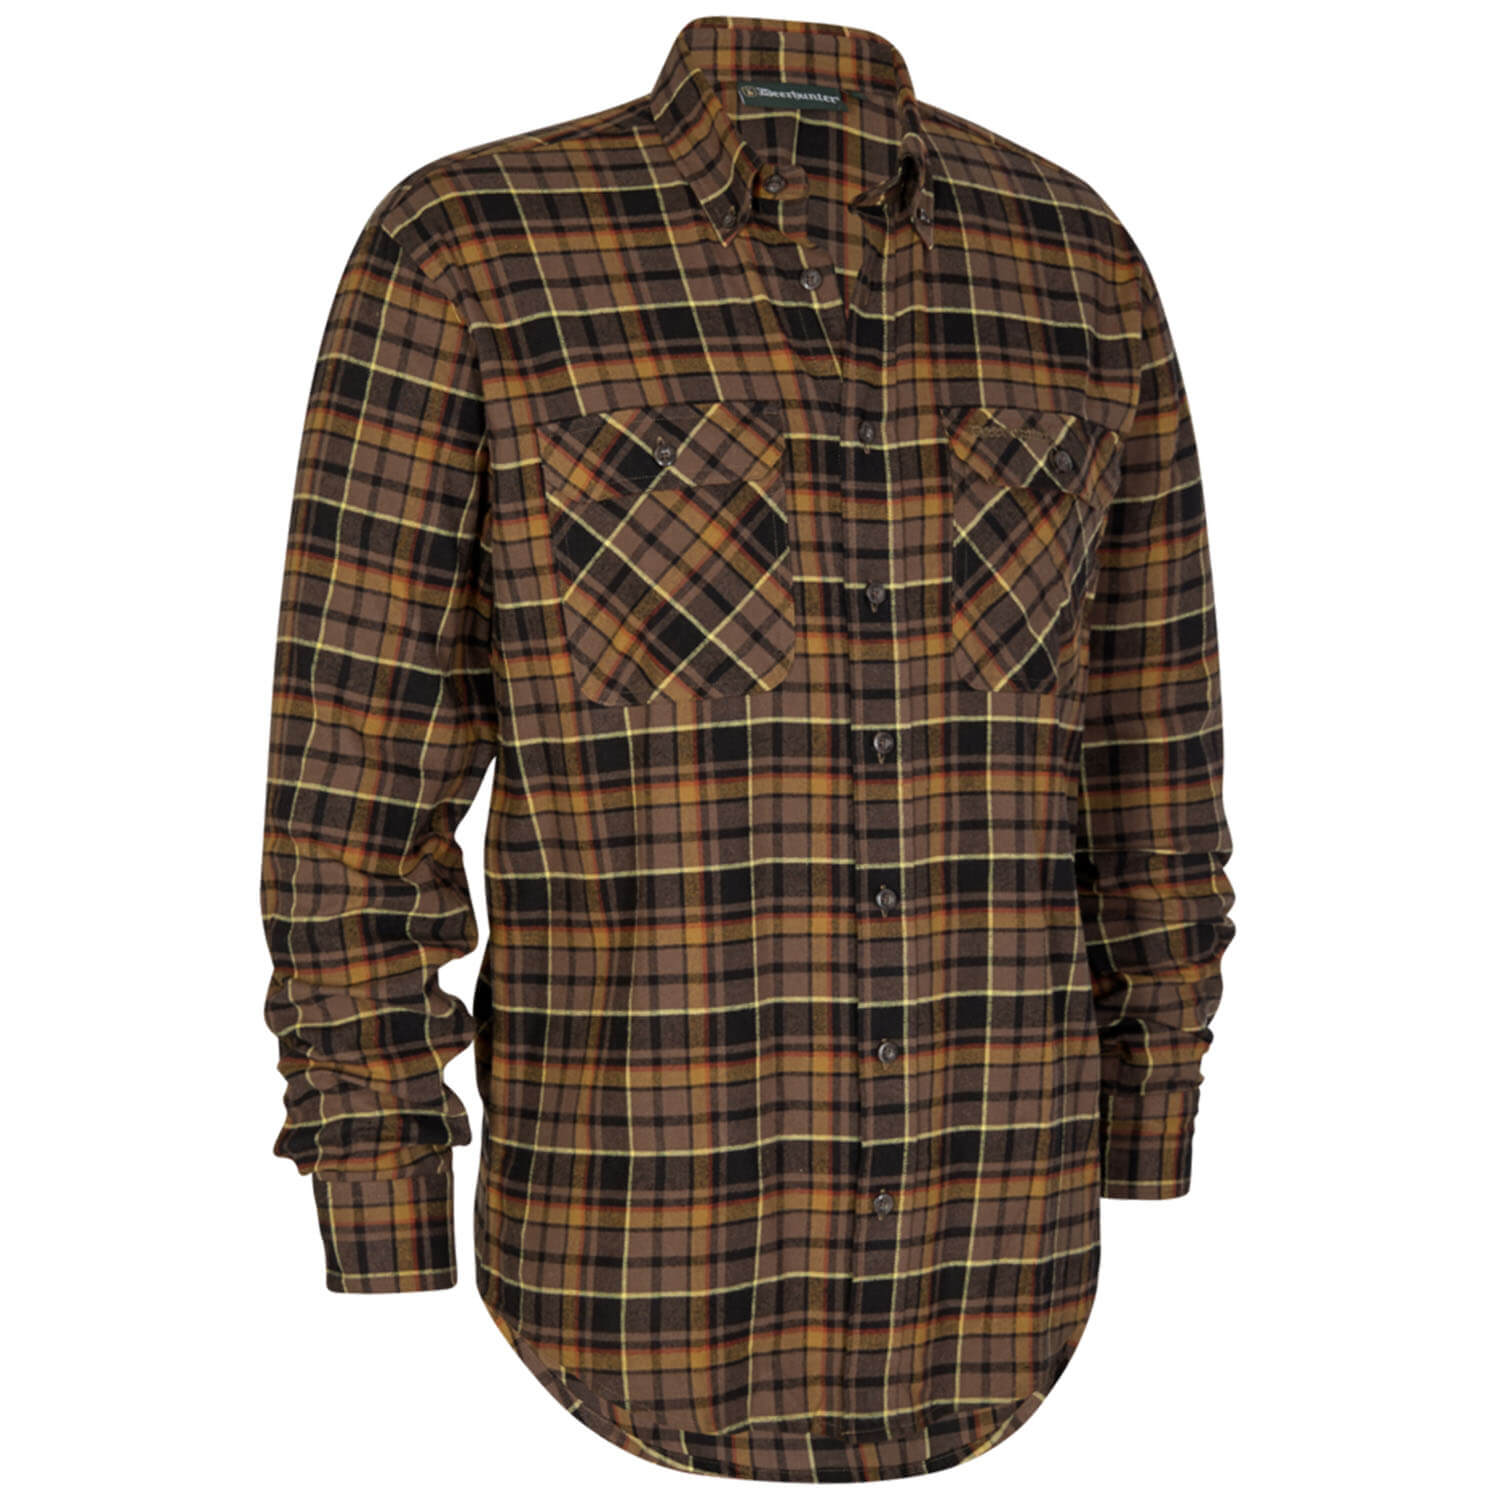  Deerhunter Marvin flanellen overhemd (Bruin geruit) - Overhemden & shirts